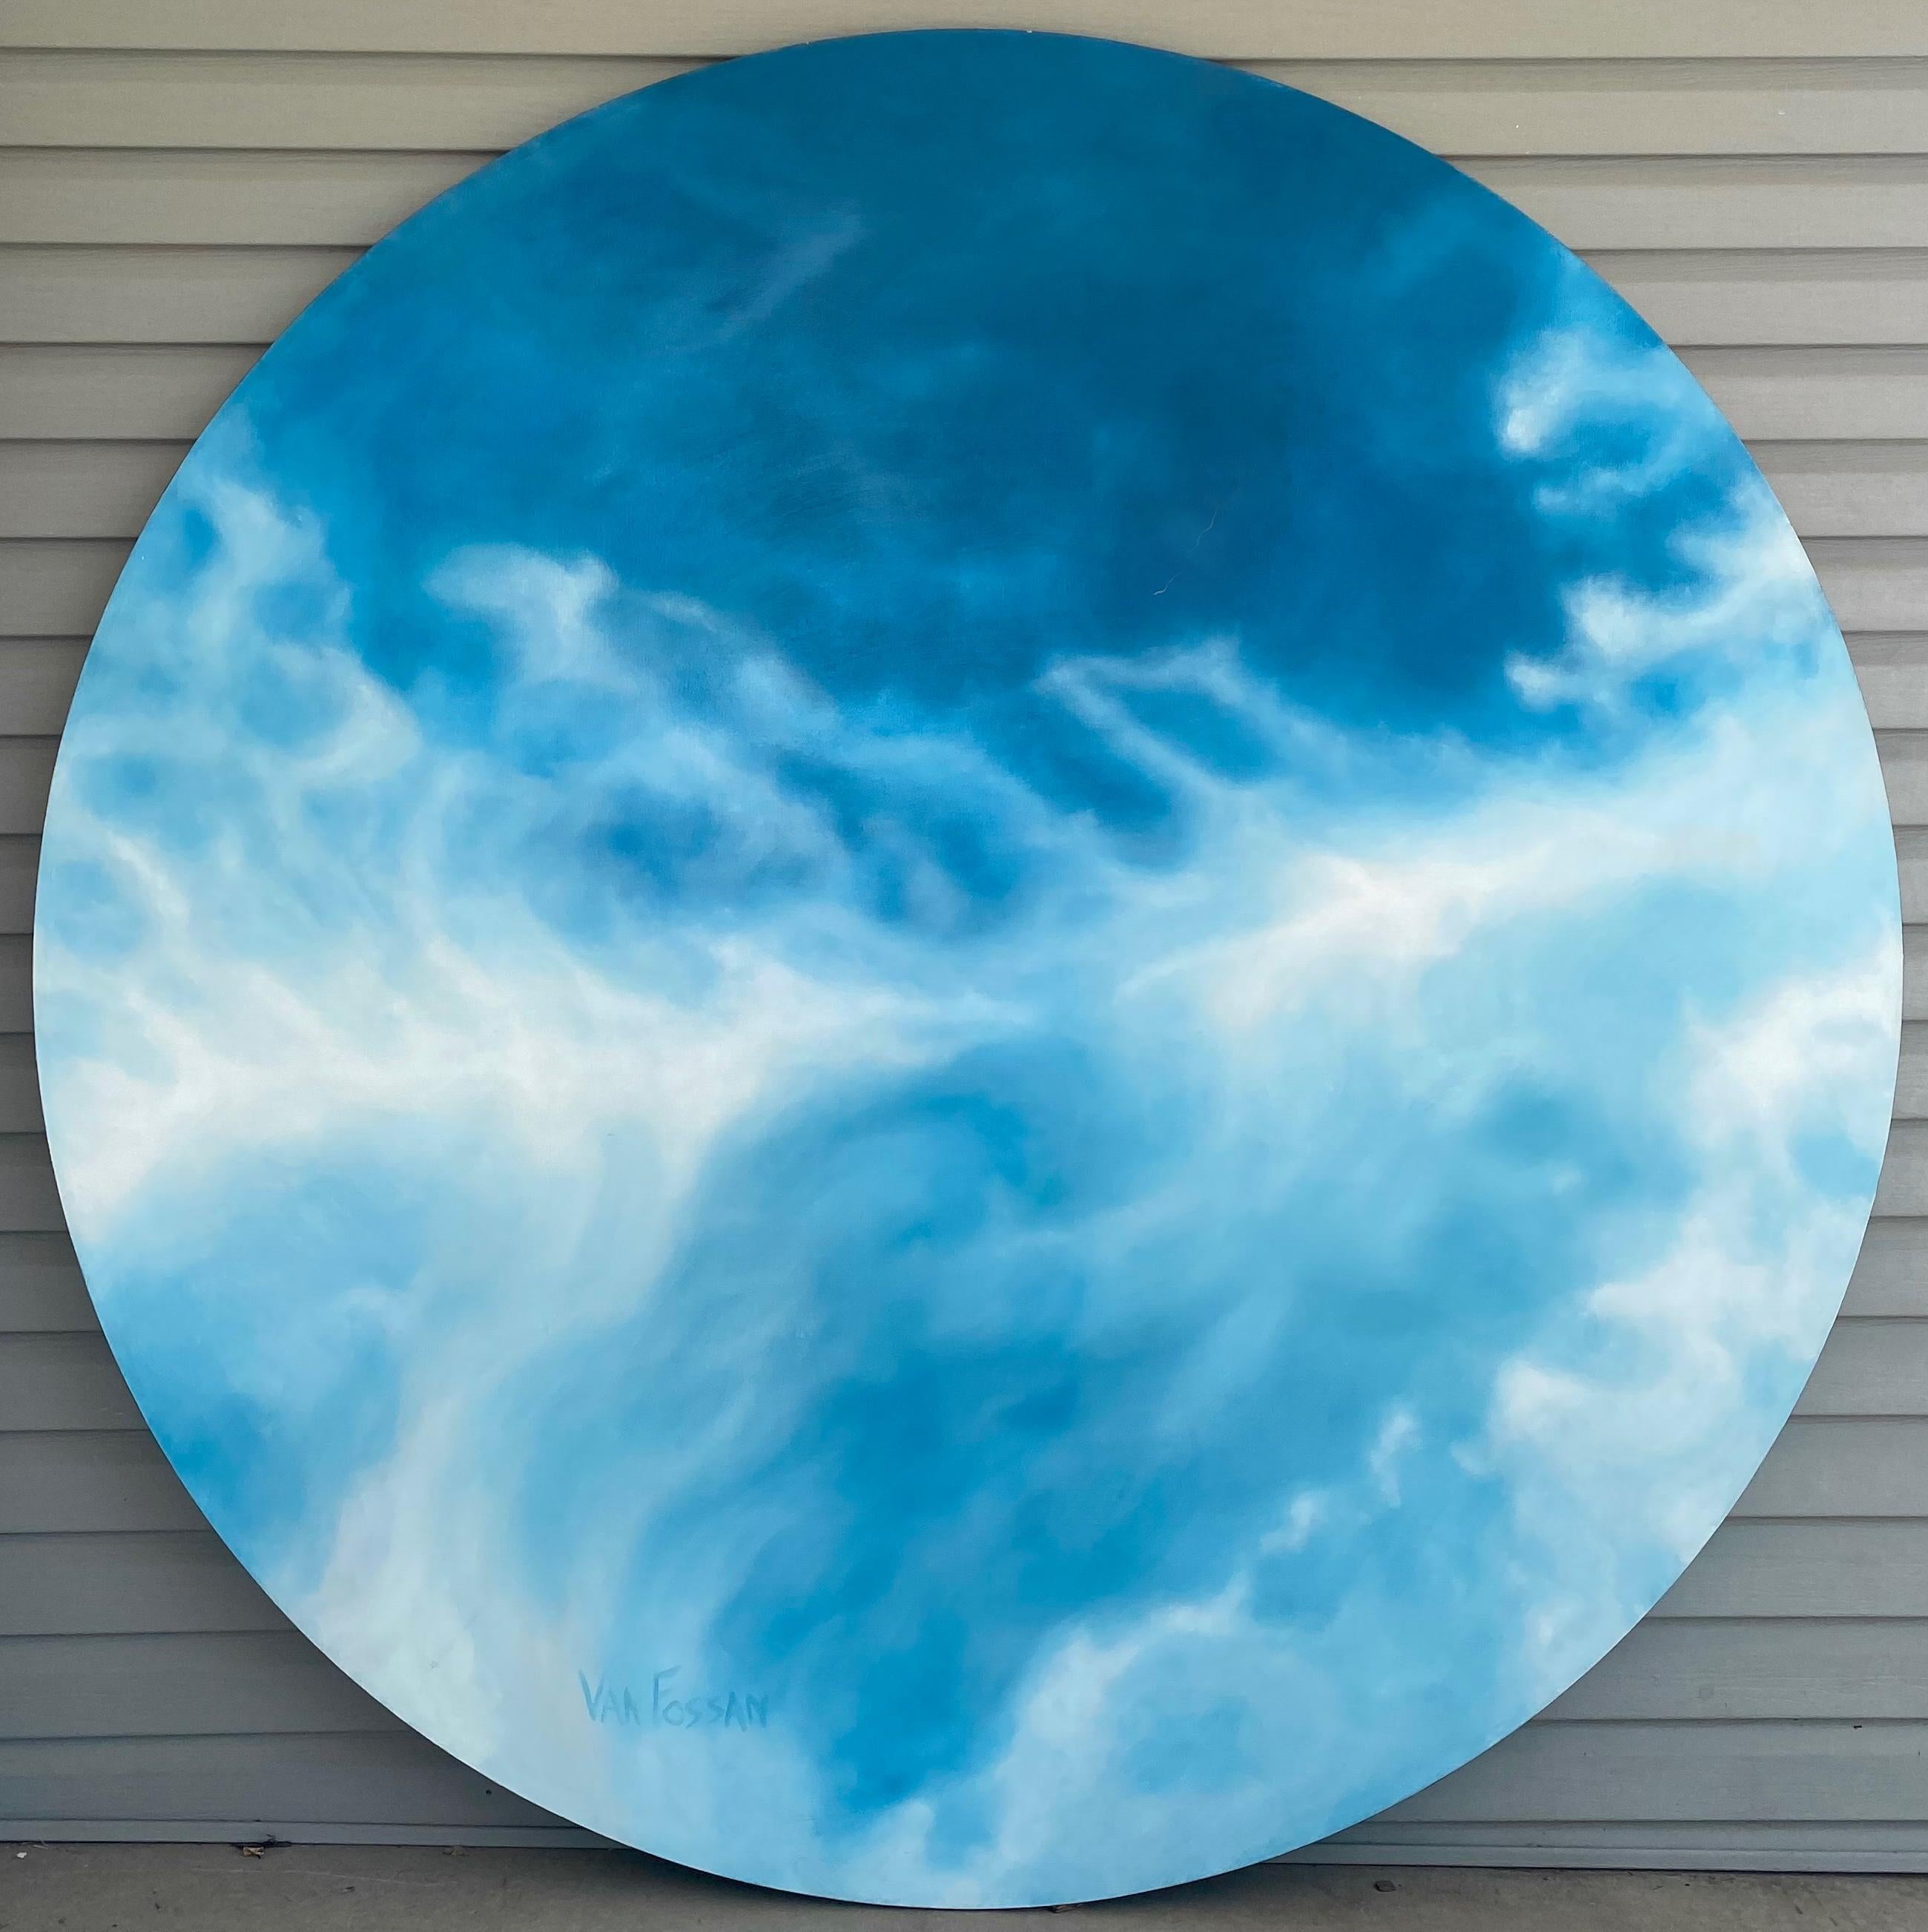 James Van Fossan Figurative Painting - "Sky 43" Oil Painting